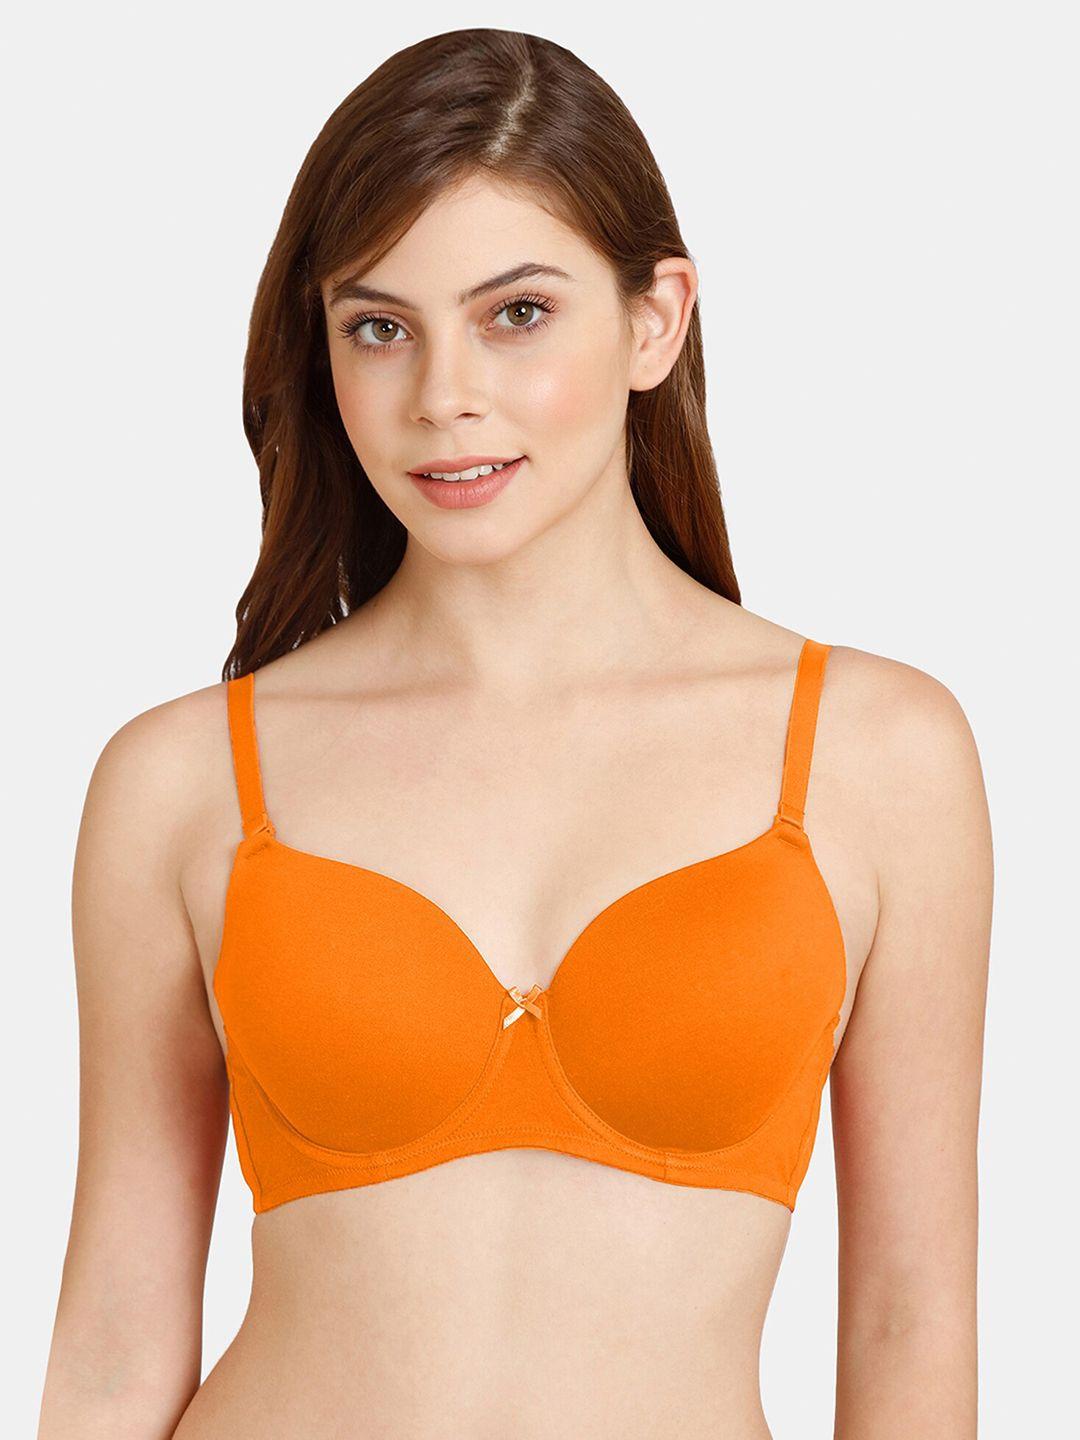 rosaline-by-zivame-women-orange-bra-underwired-lightly-padded